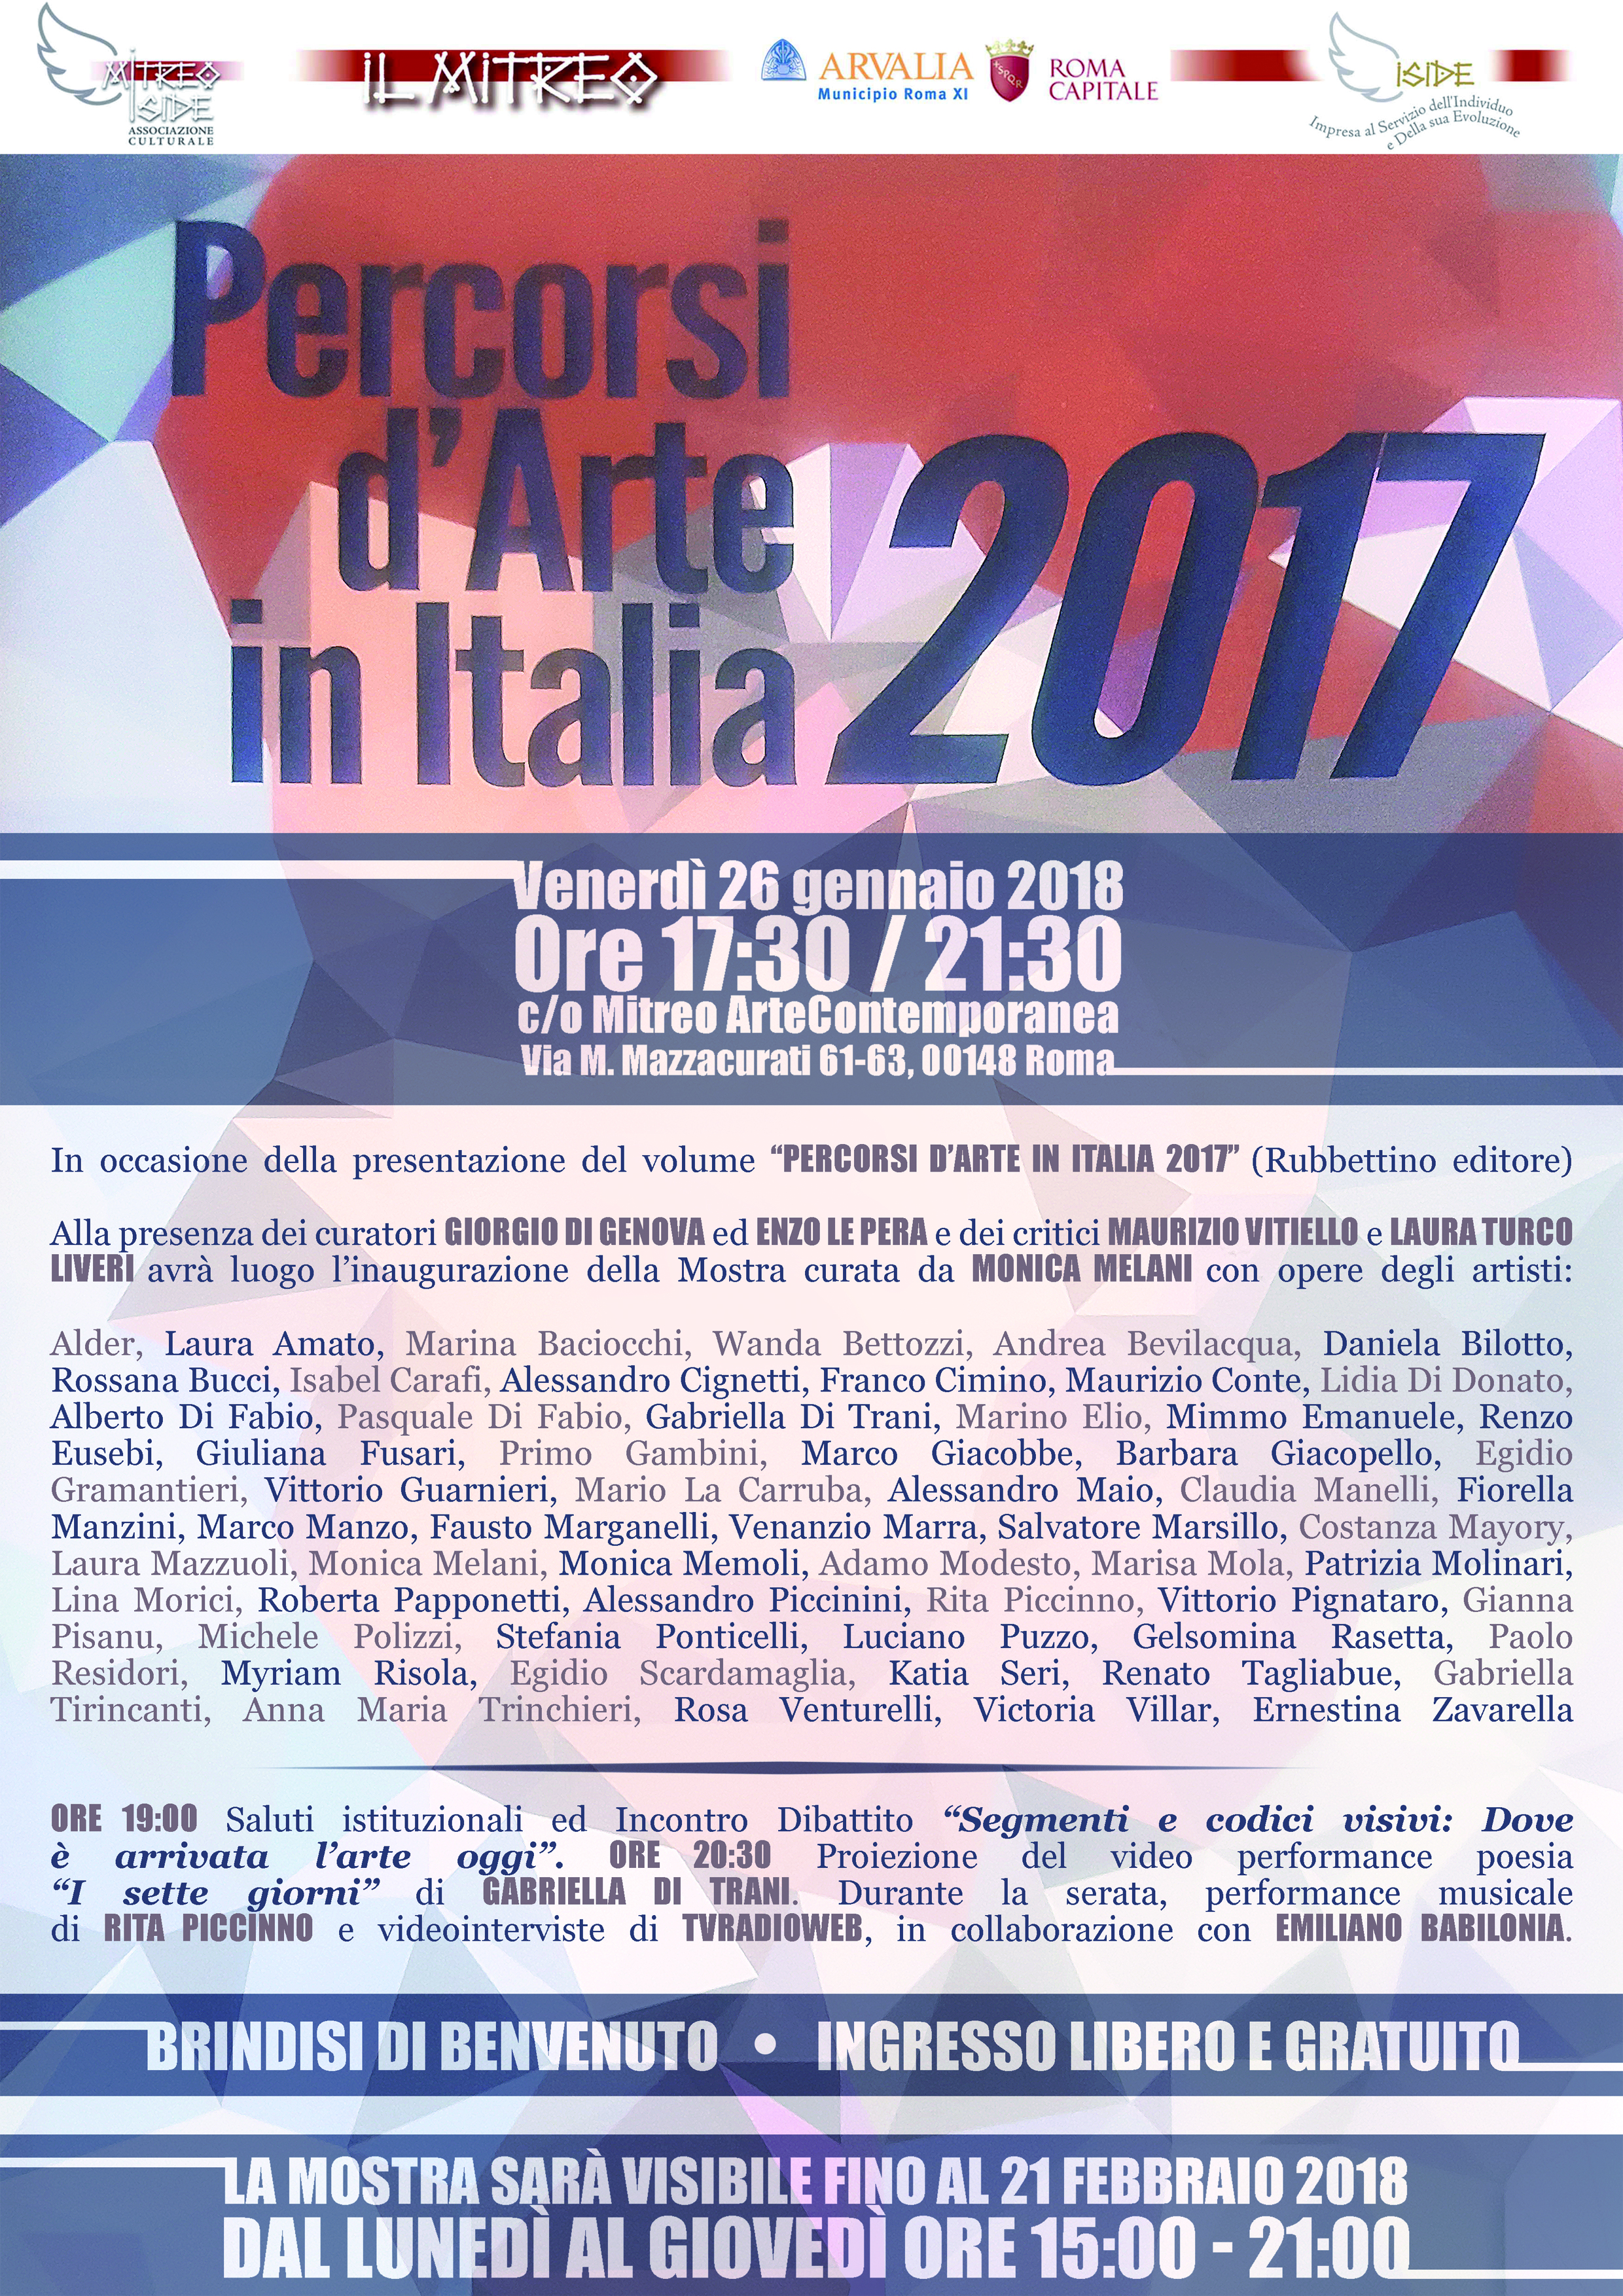 Percorsi d'Arte in Italia 2017|2017 Artistic Paths in Italy